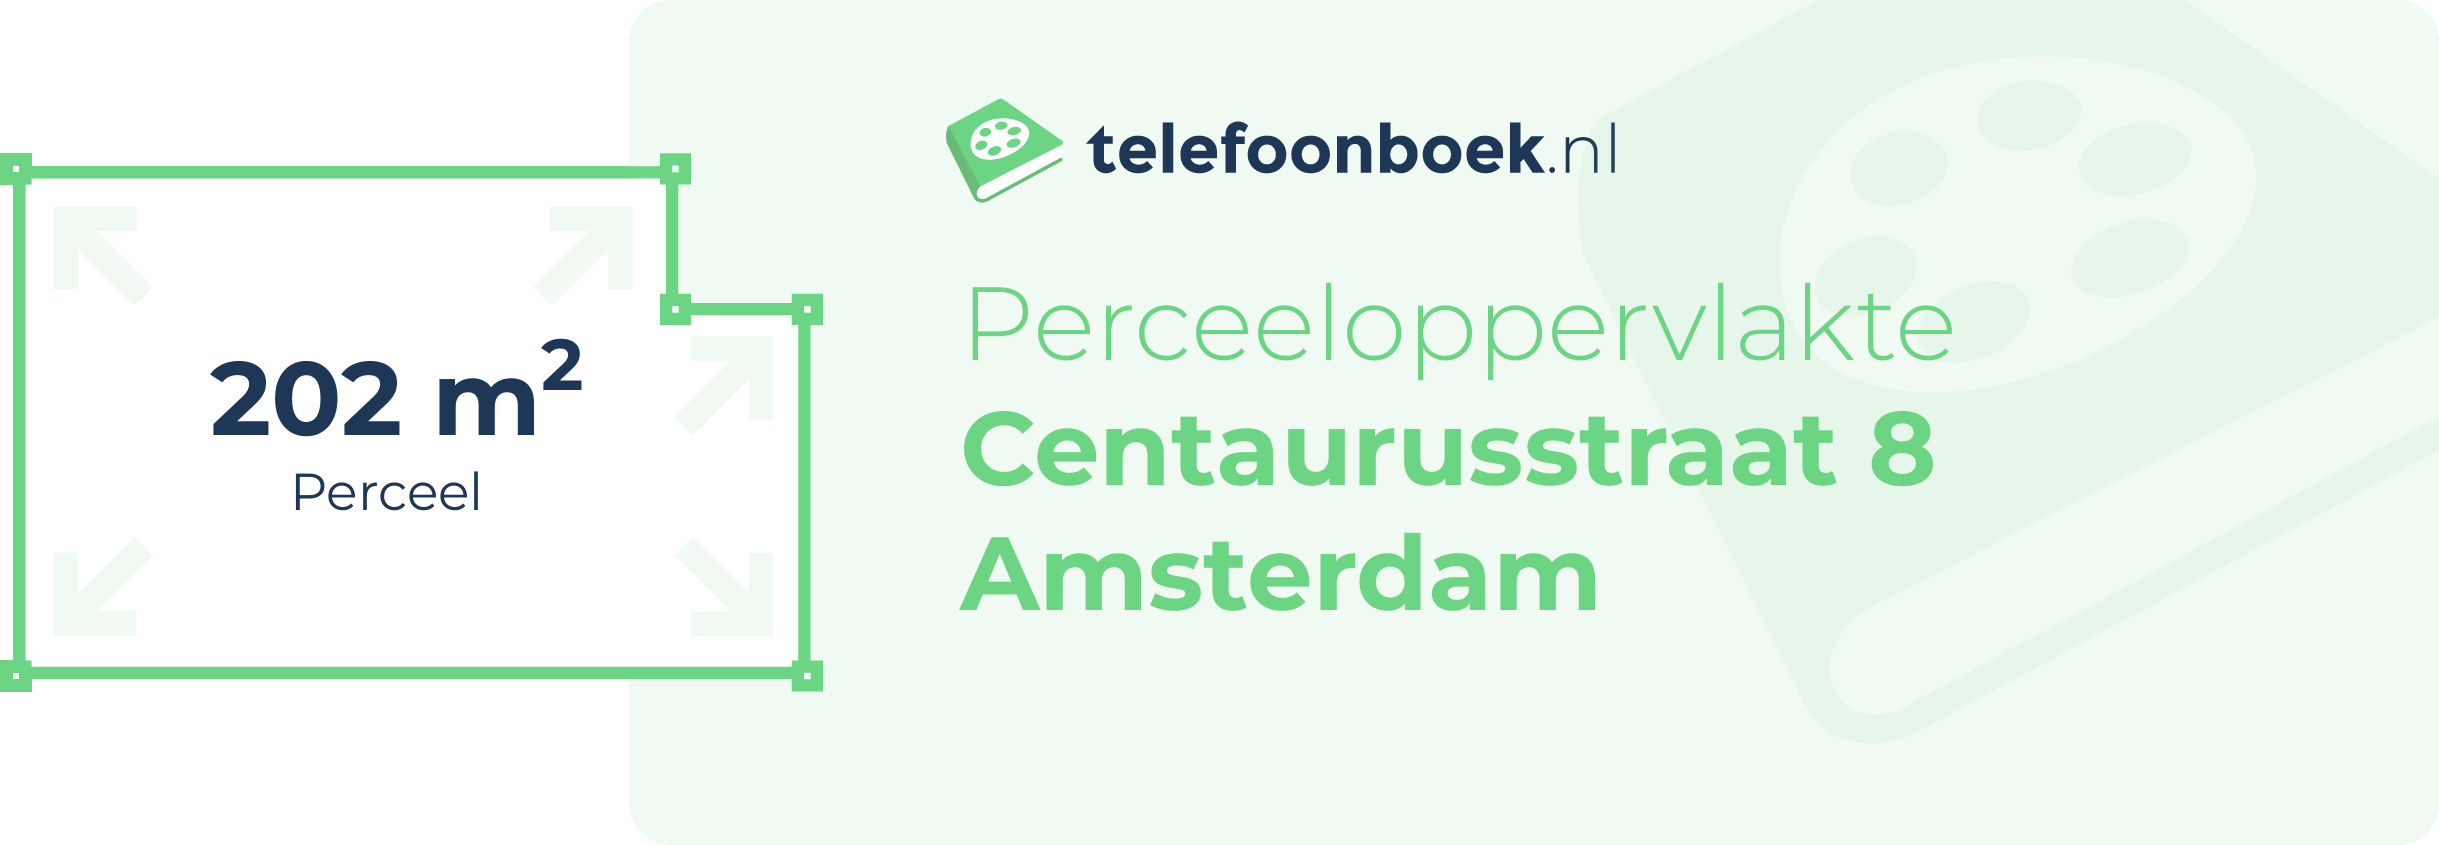 Perceeloppervlakte Centaurusstraat 8 Amsterdam